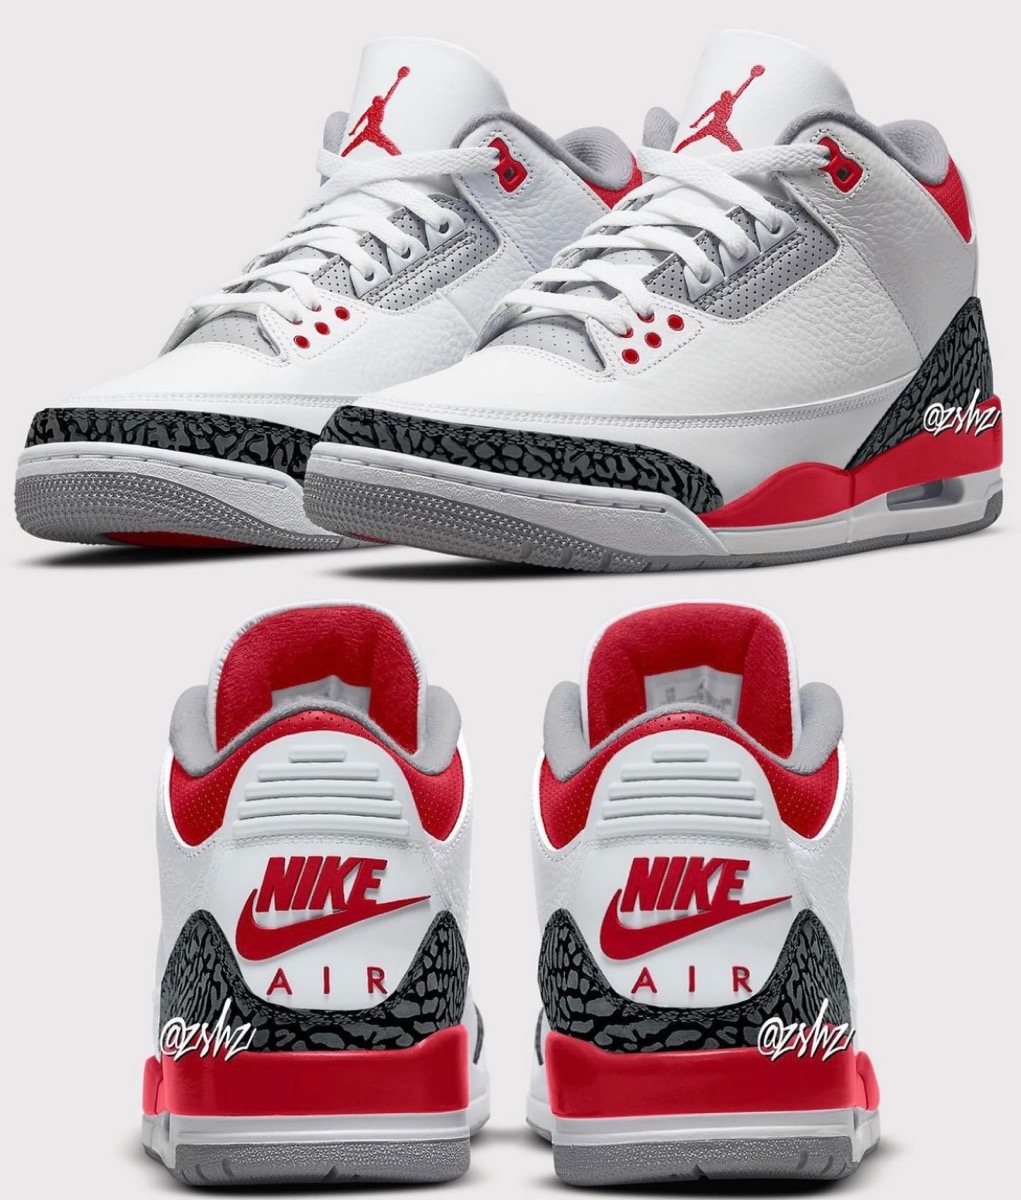 Nike】Air Jordan 3 Retro OG “Fire Red”が2022年8月6日に復刻発売予定 